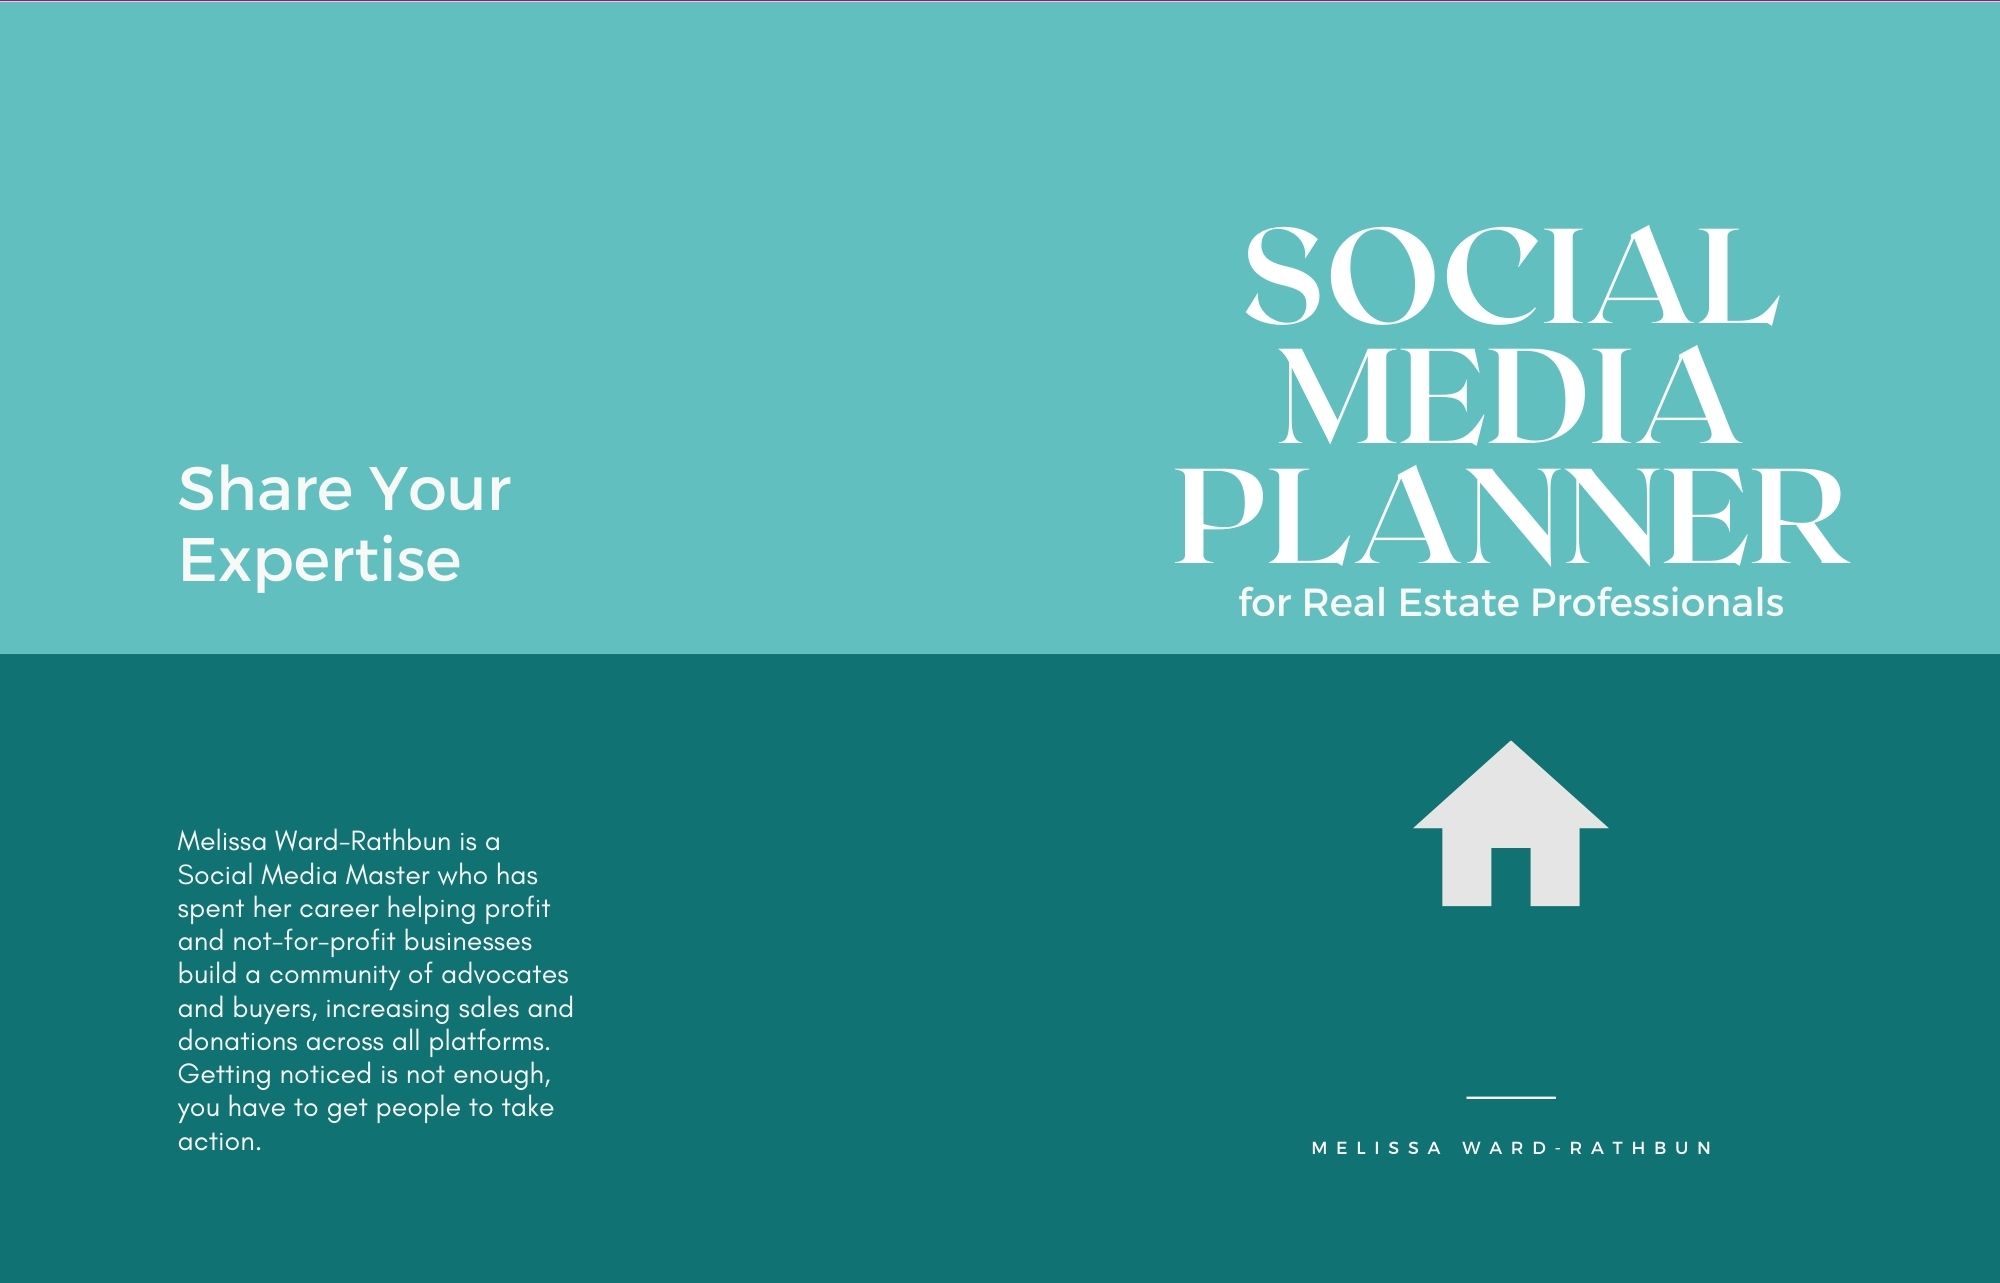 Social Media Planner for Real Estate Professionals